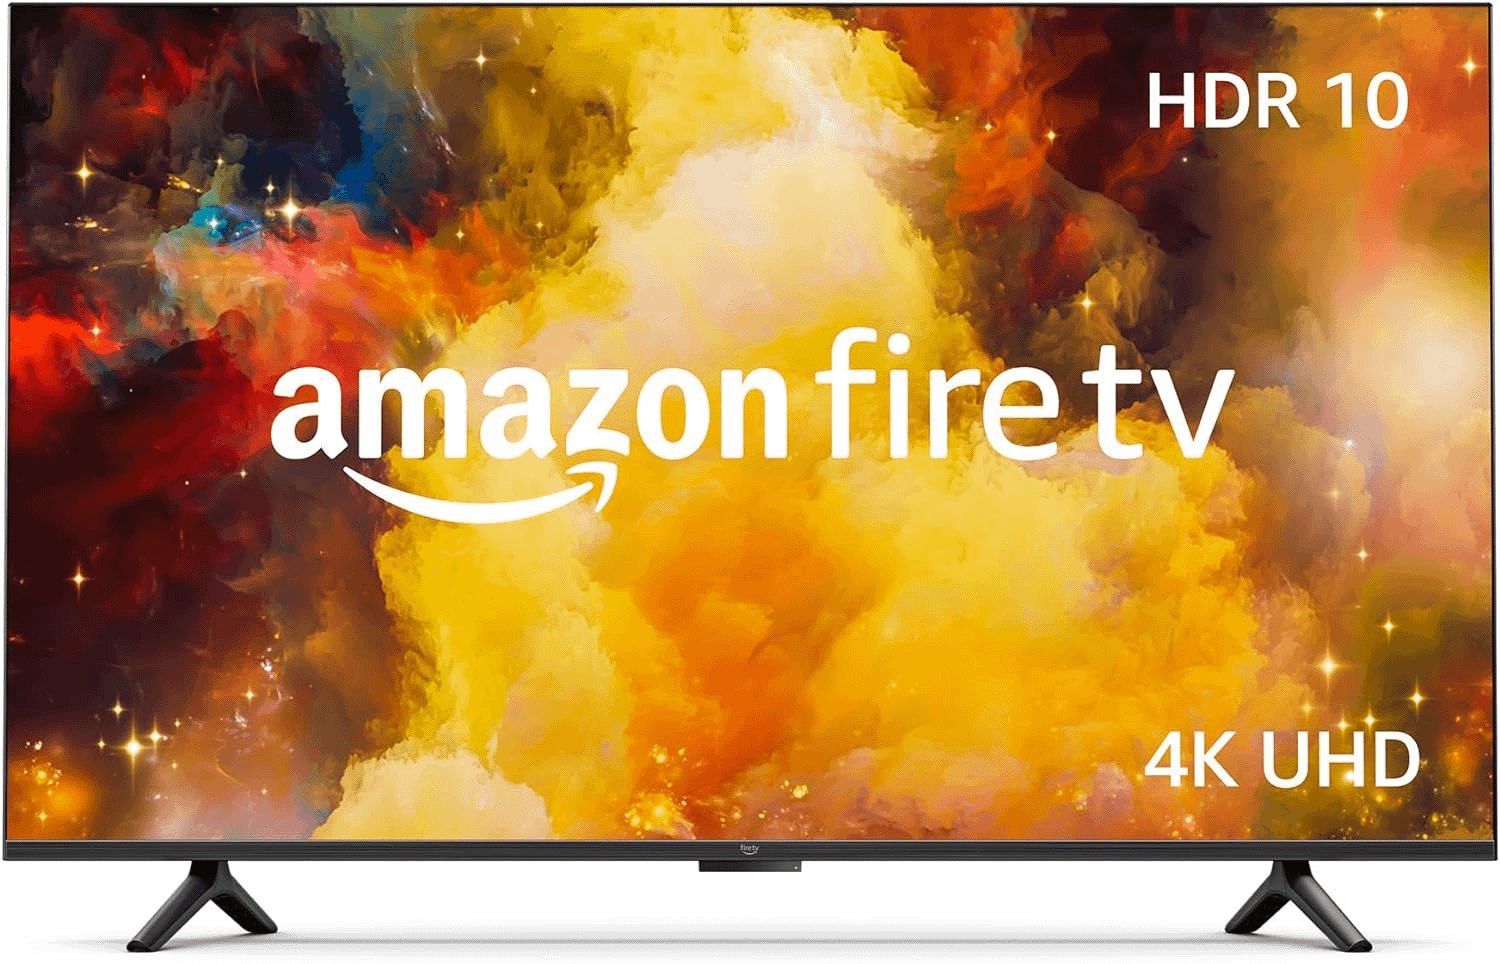 January TV Deals - Amazon Fire TV 55" Omni Series 4K UHD smart TV